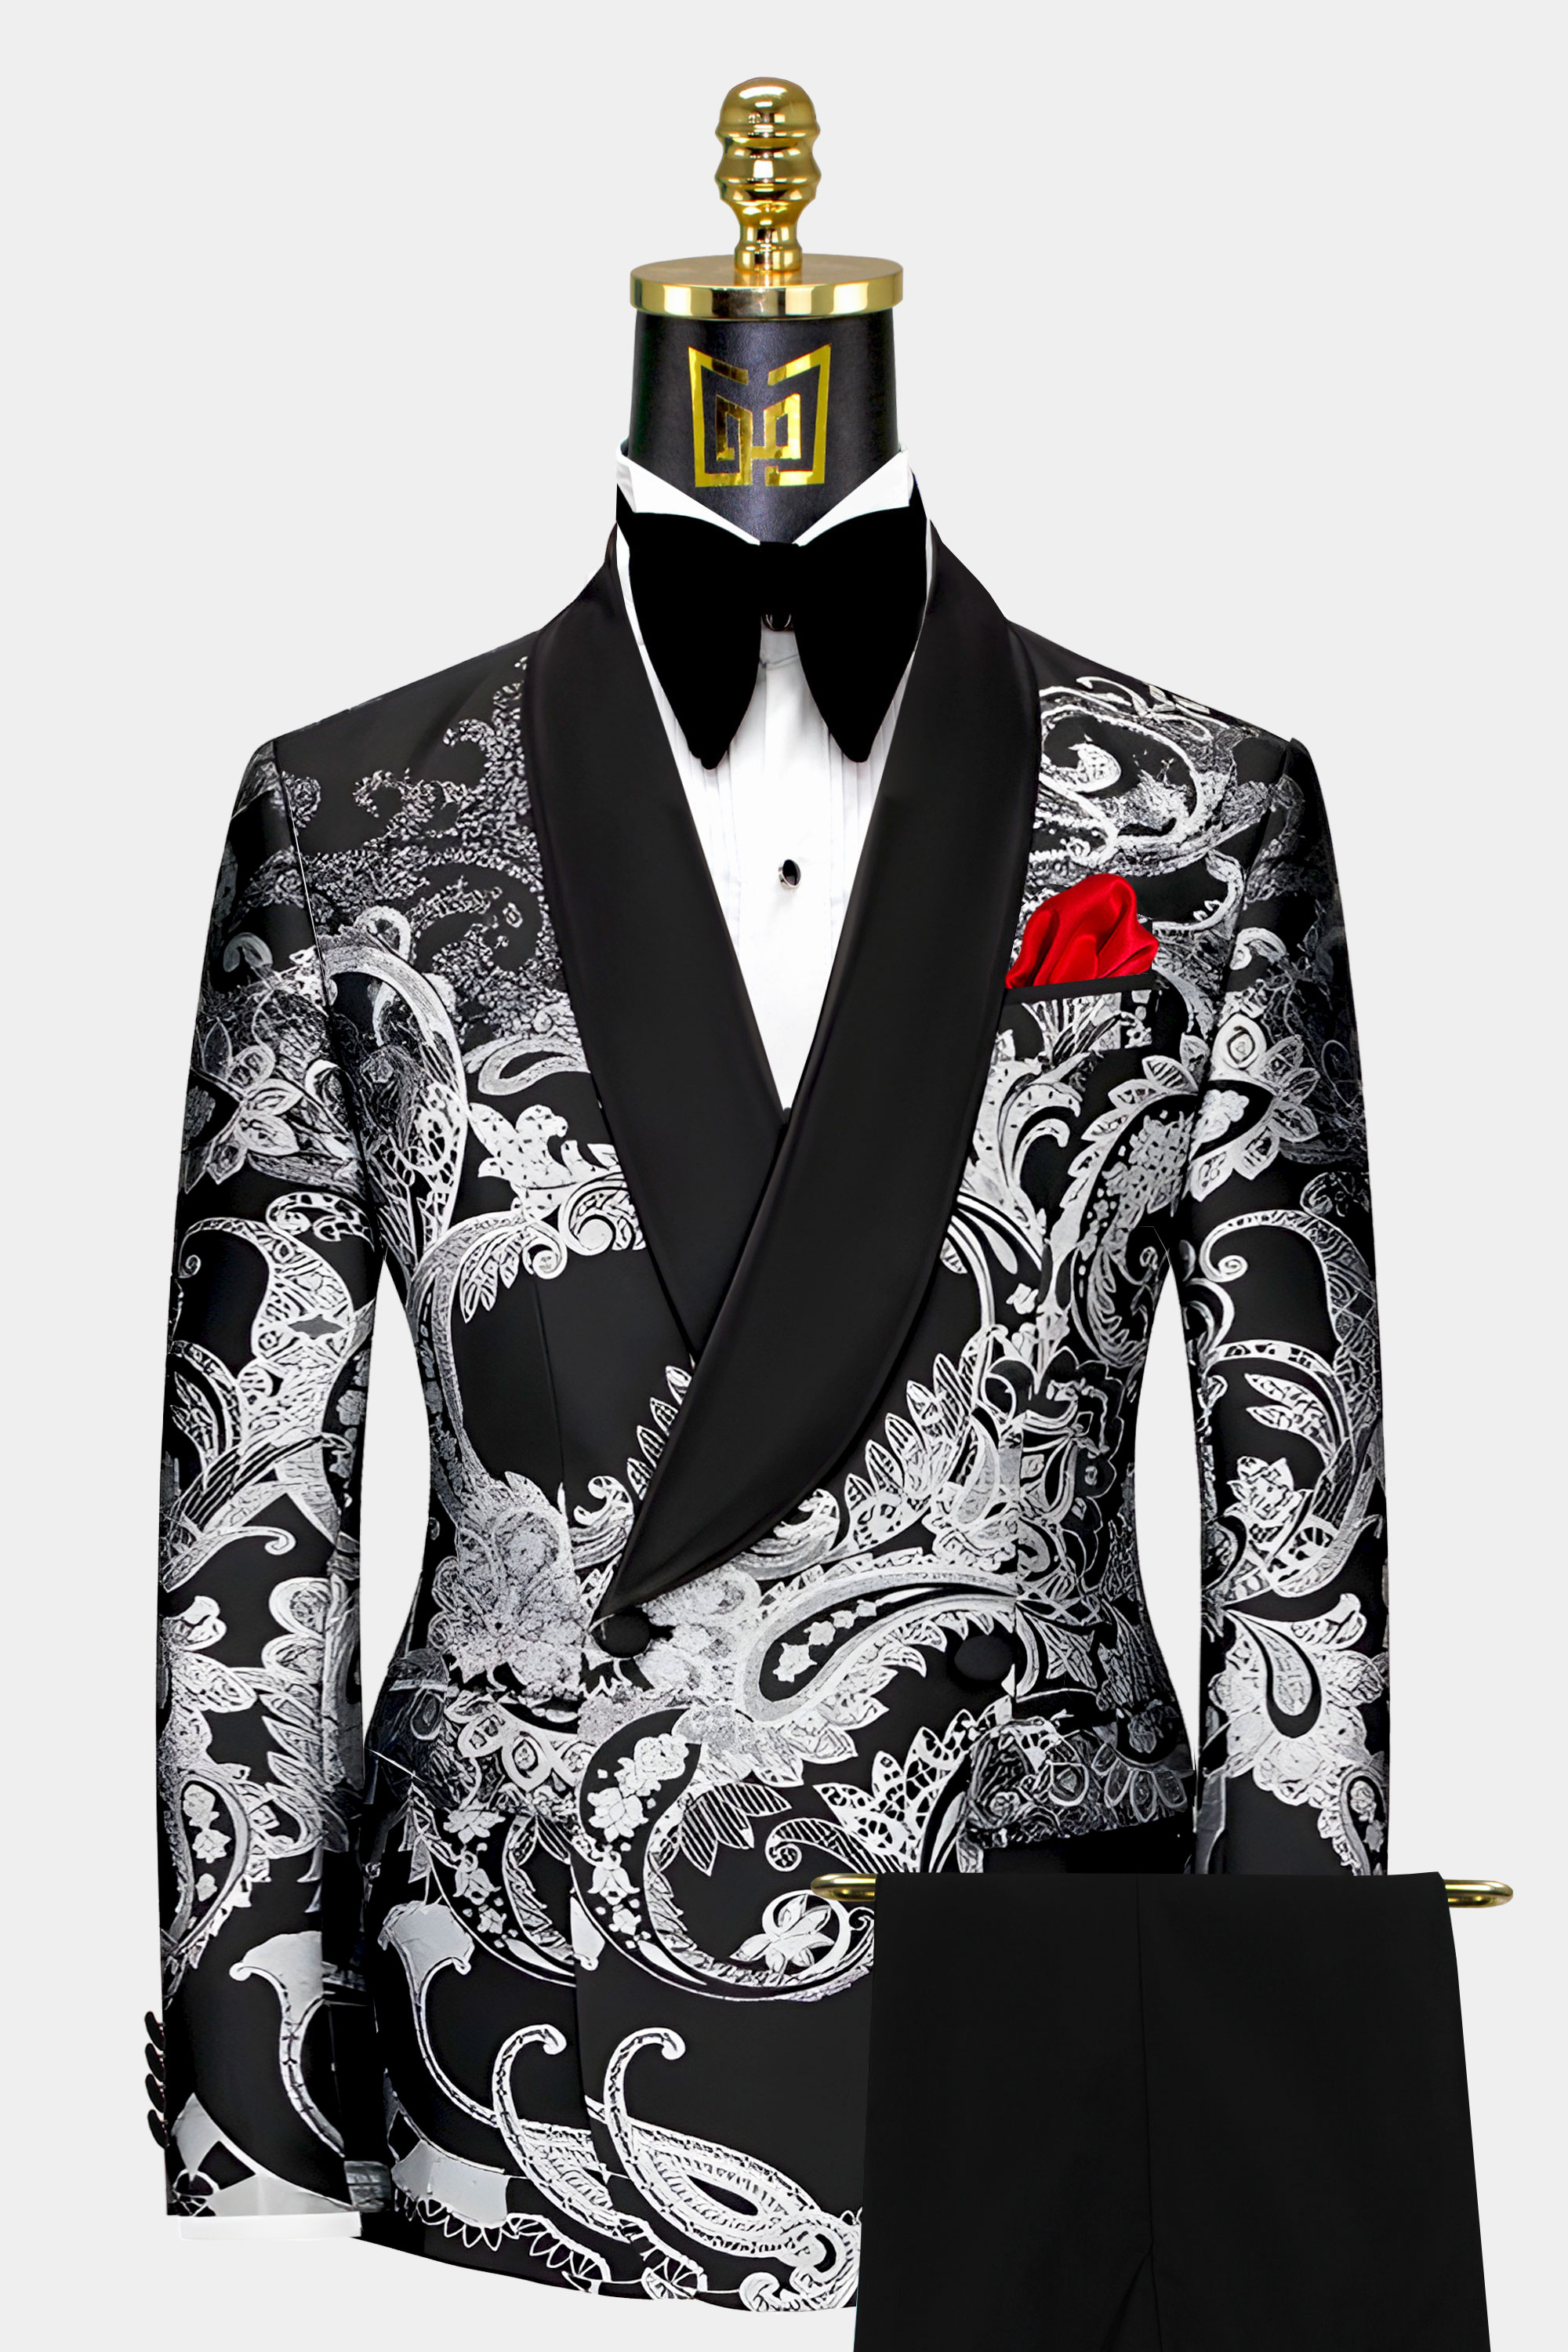 Mens-Black-and-Silver-Tuxedo-Groom-Wedding-Prom-Suit-from-Gentlemansguru.com